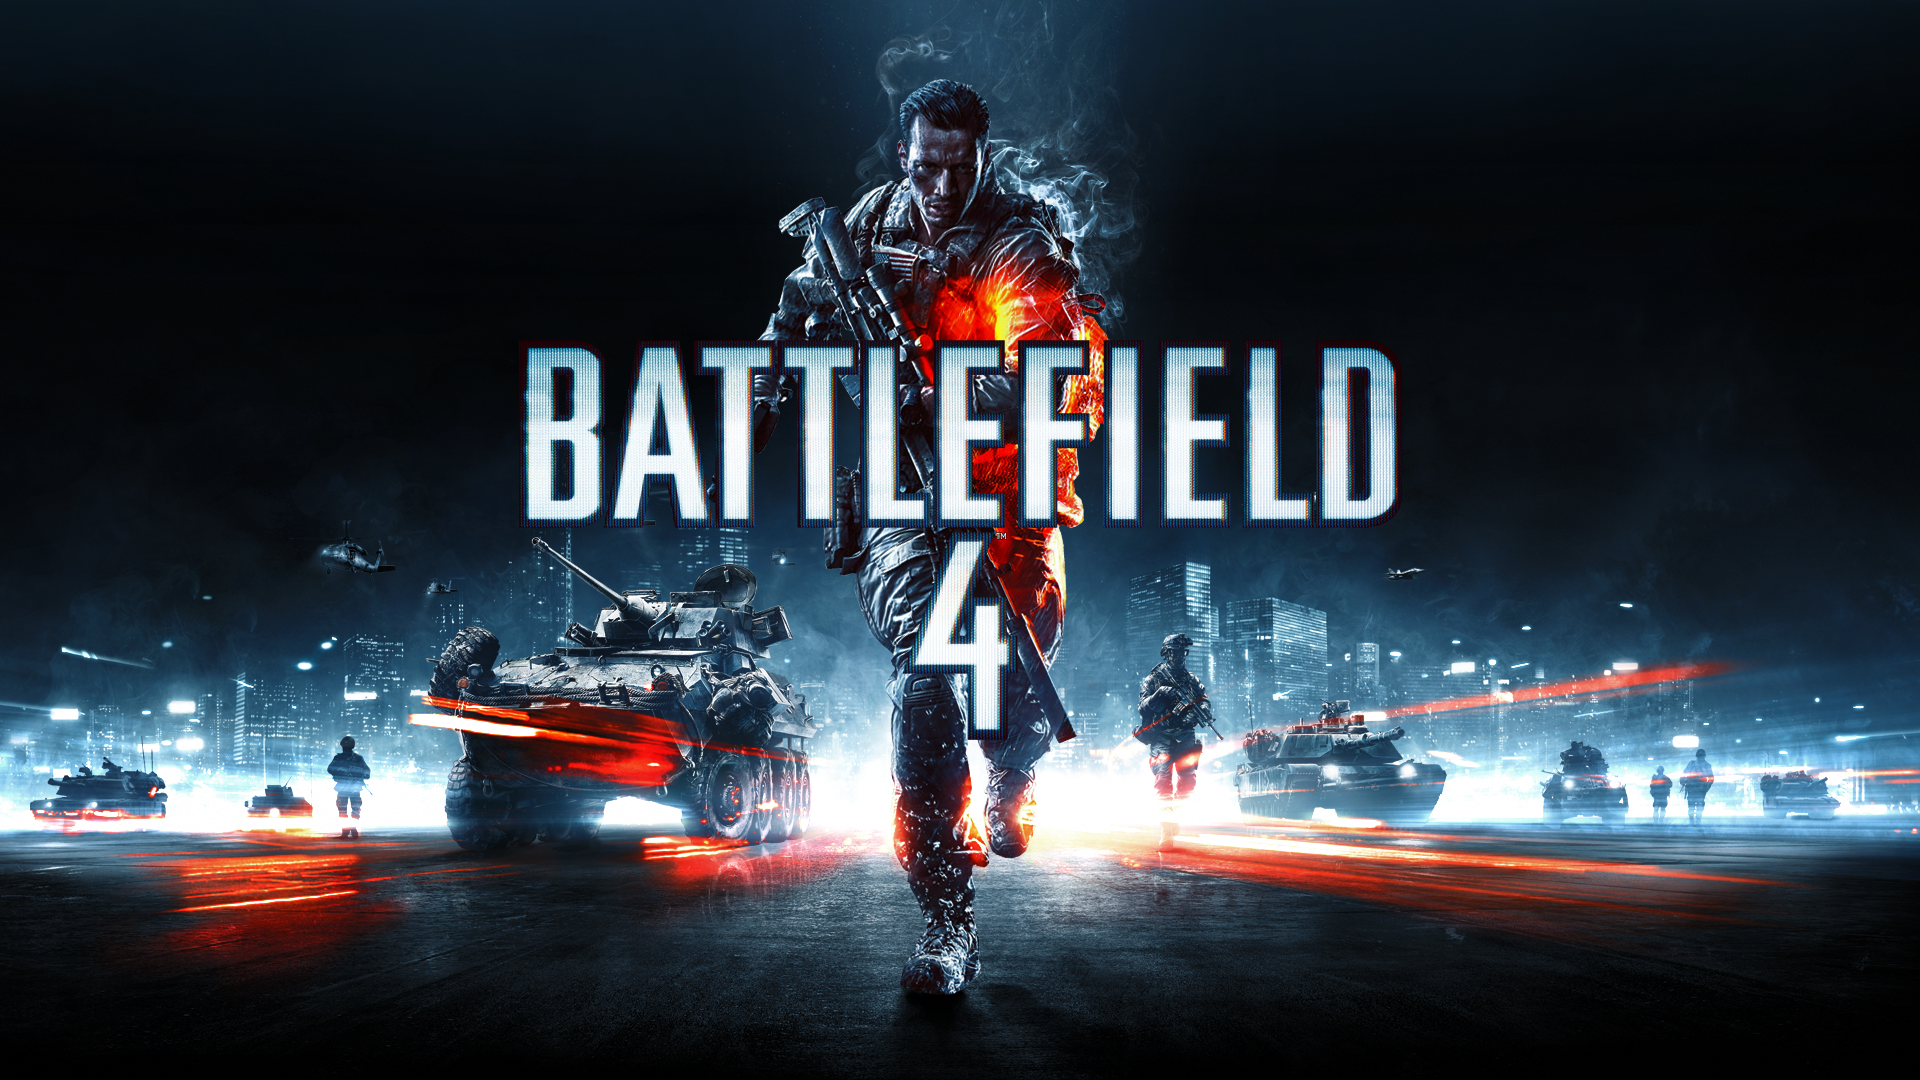 Battlefield 4 Wallpaper PSD by Aspera-Destroyer by VirtualCinematics